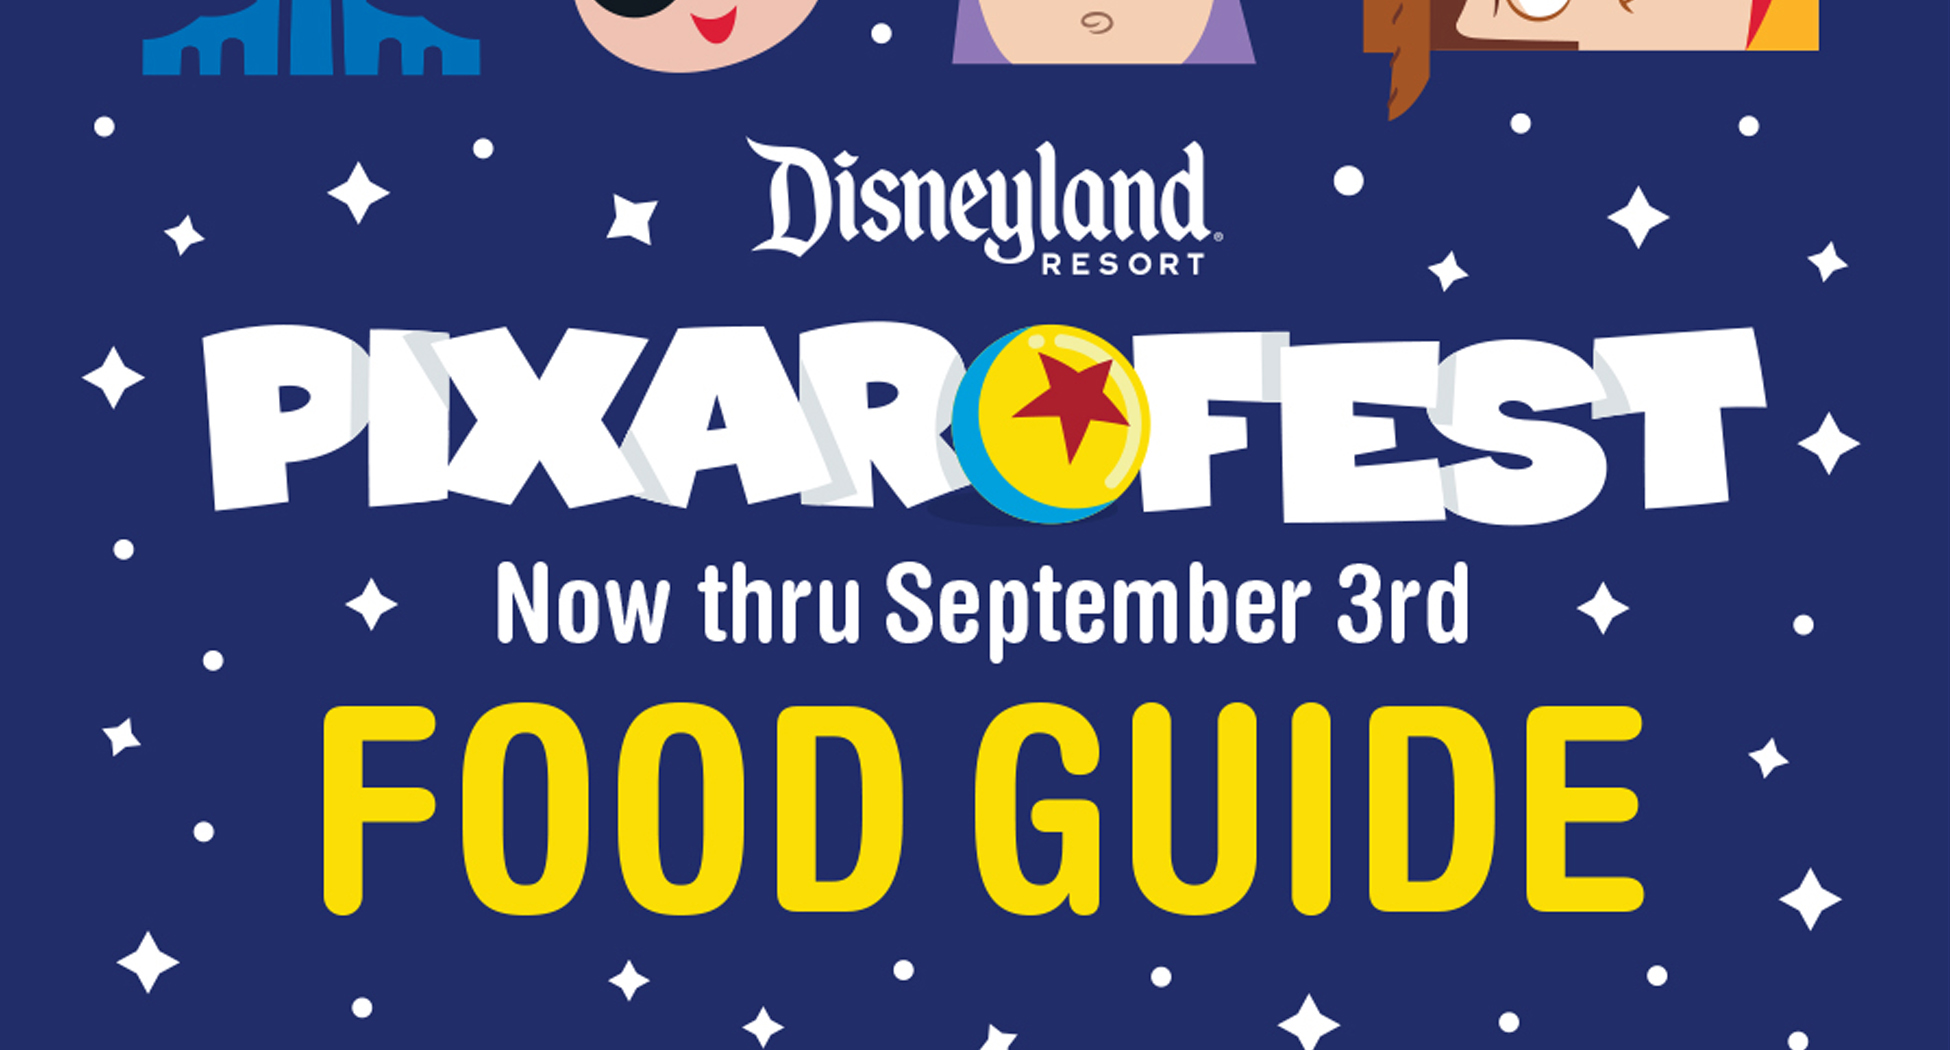 Pixar Fest Food Guide Dining Disneyland Resort